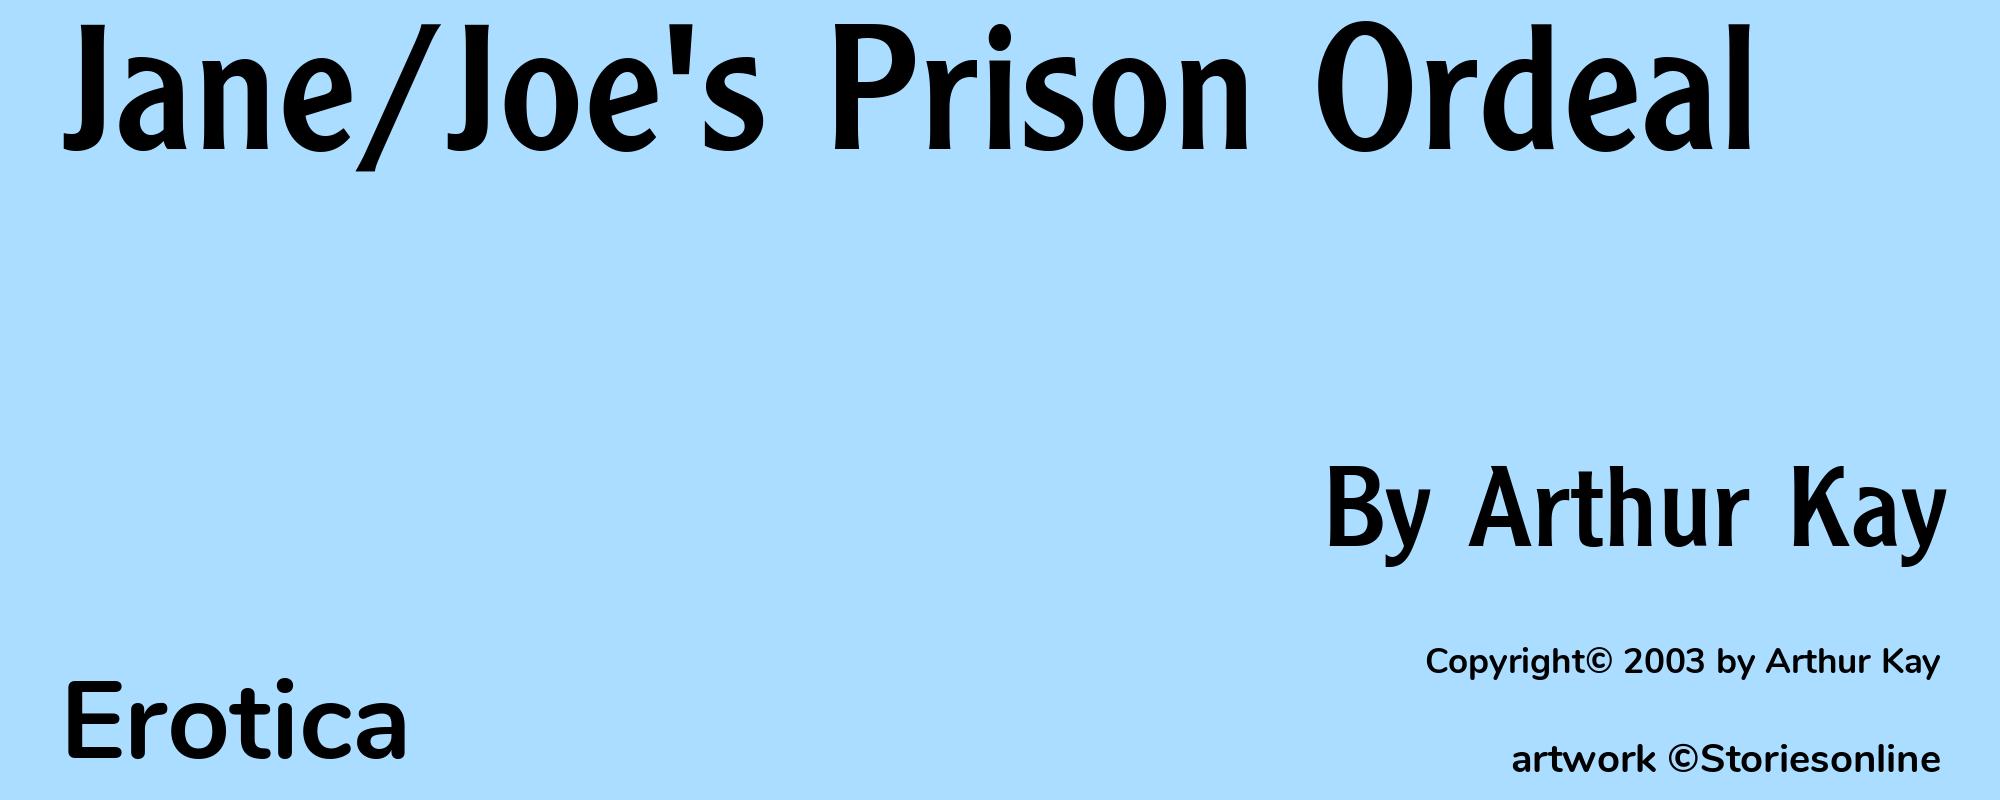 Jane/Joe's Prison Ordeal - Cover